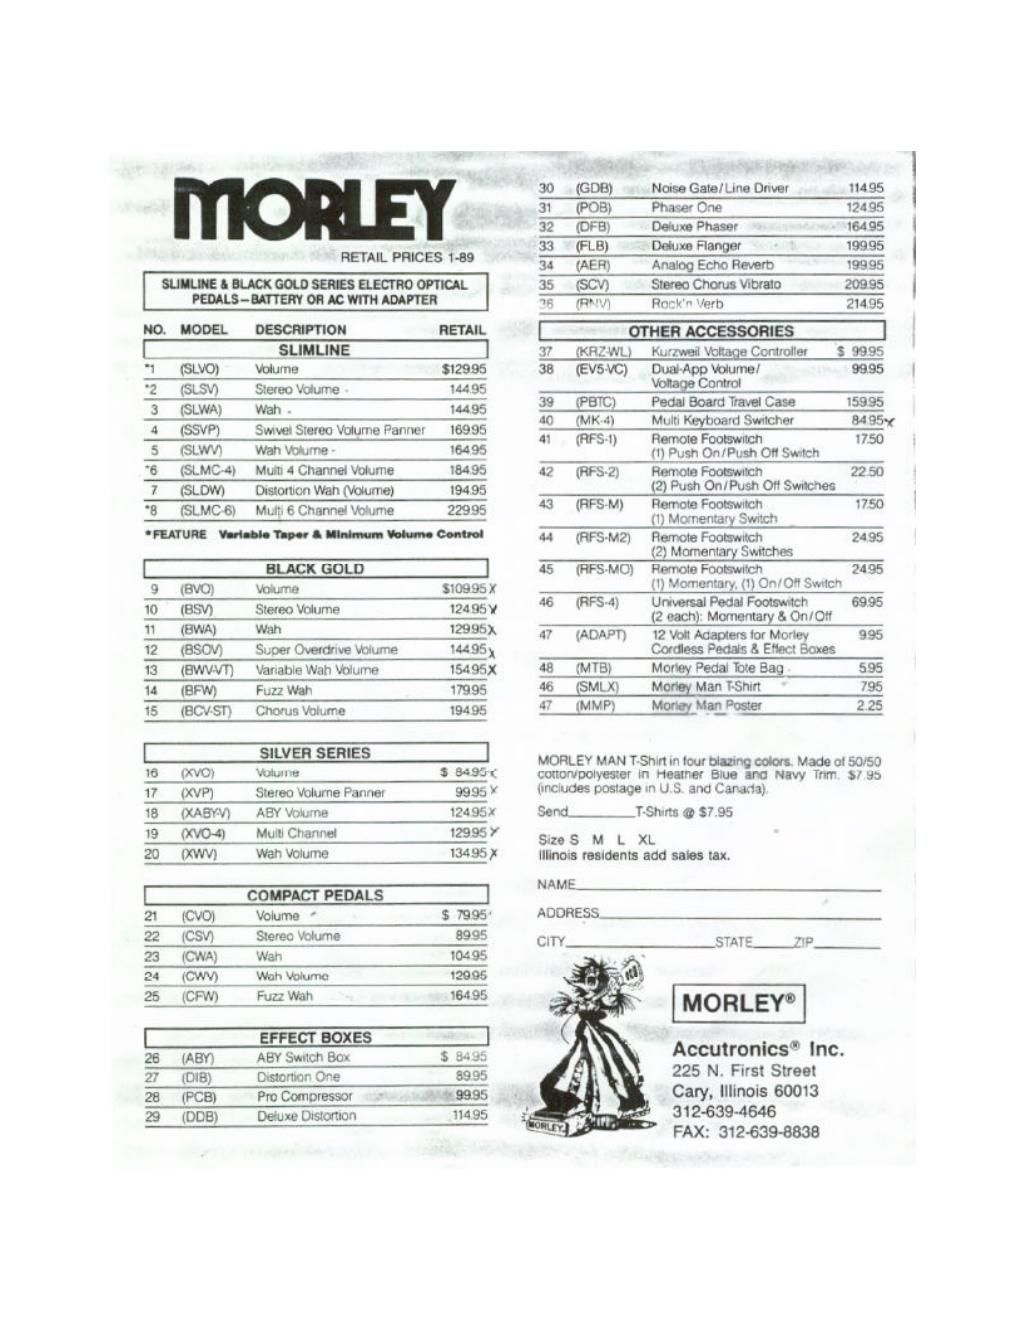 morley morley pricelist 1989